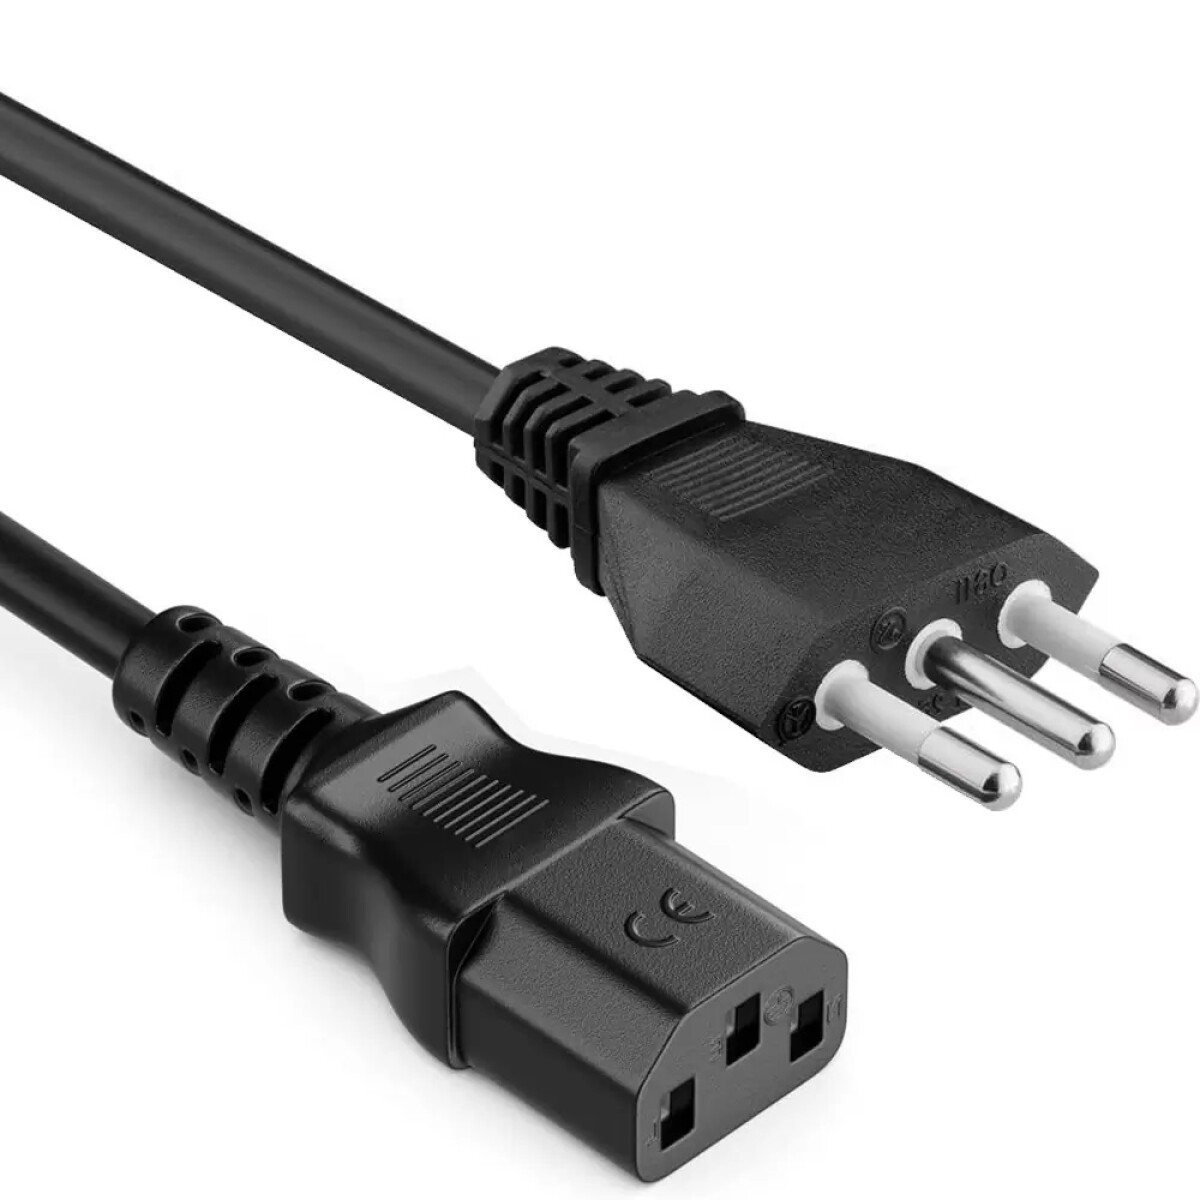 Cable De Poder Interlock Tres En Linea 1,5mts 